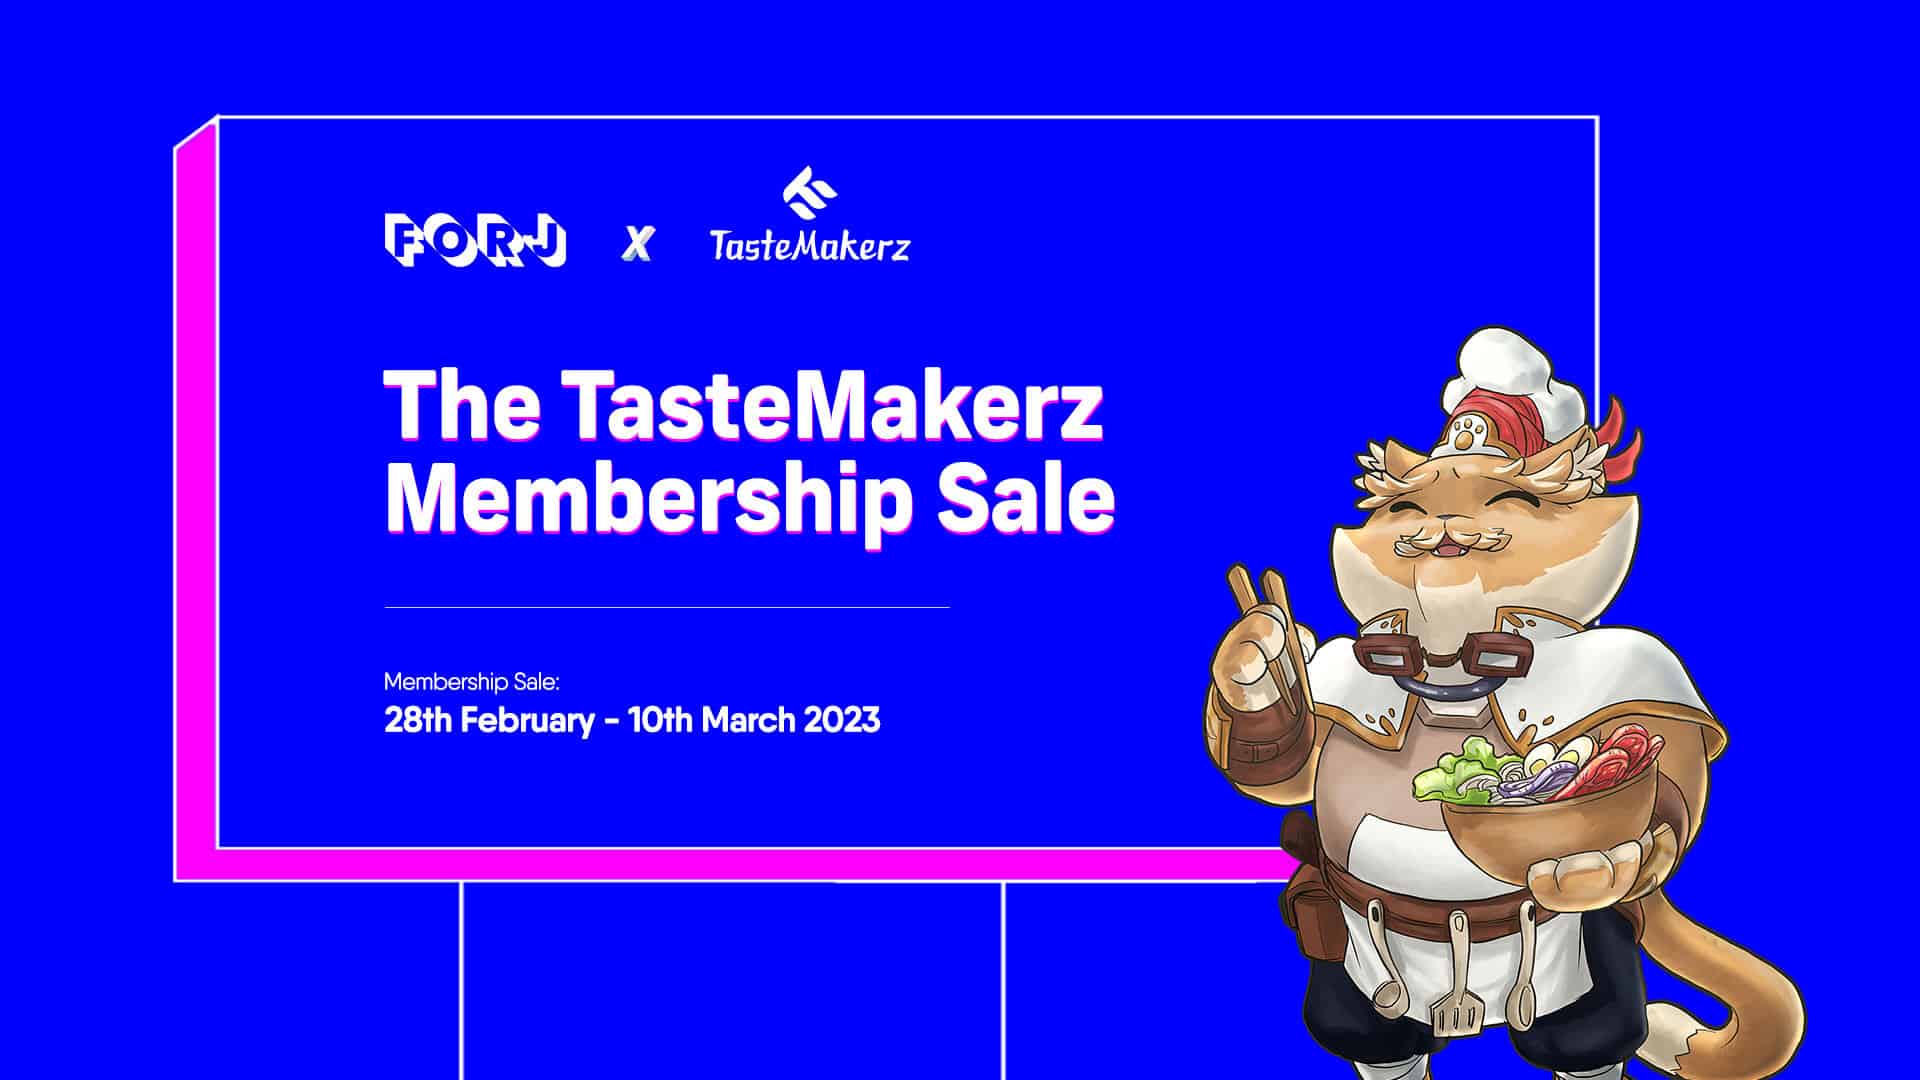 Forj Announce TasteMakerz Membership Sale